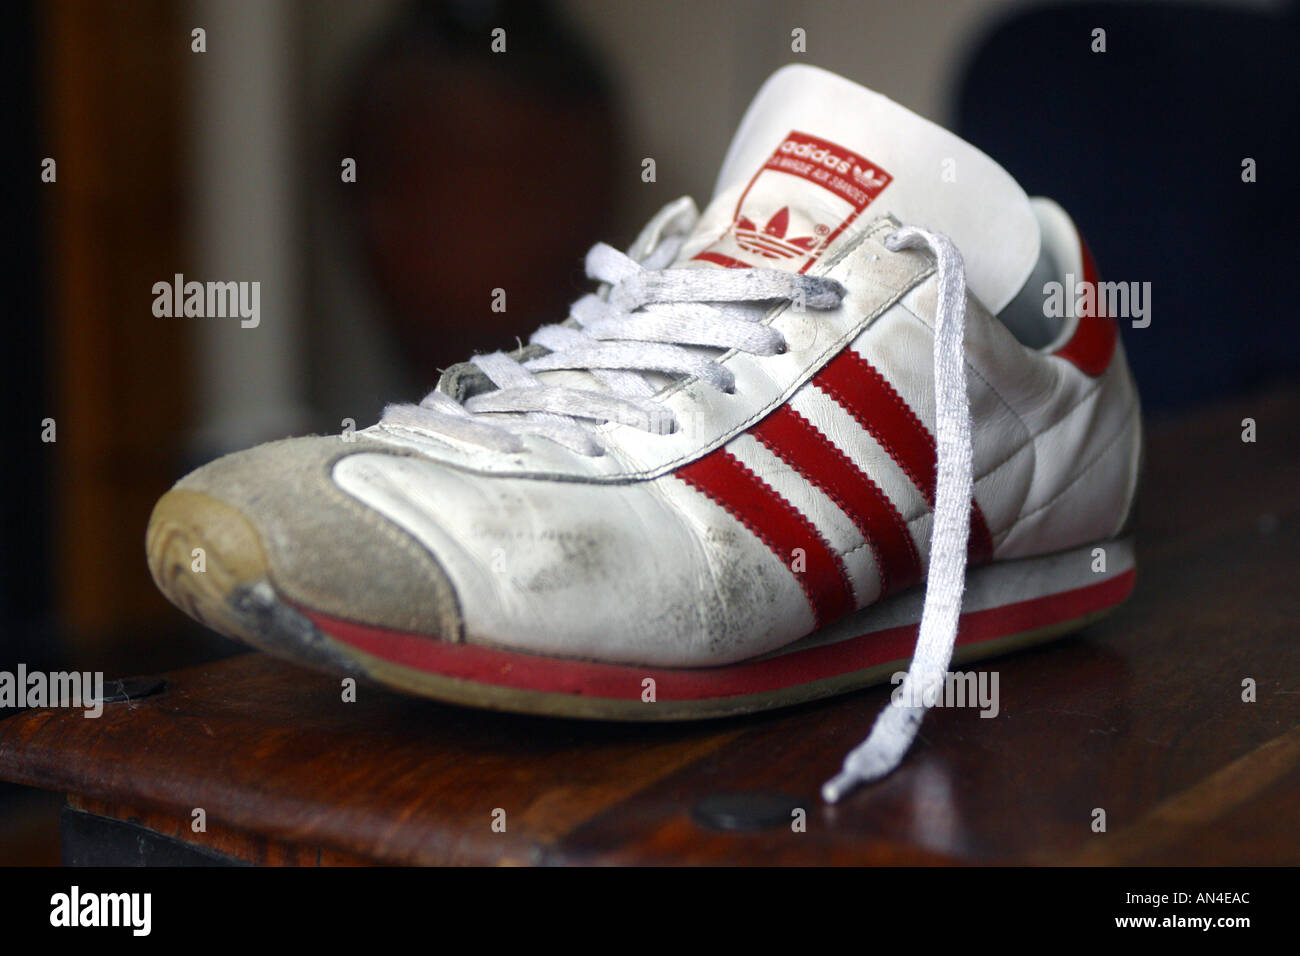 Adidas sneaker trainer Stock Photo